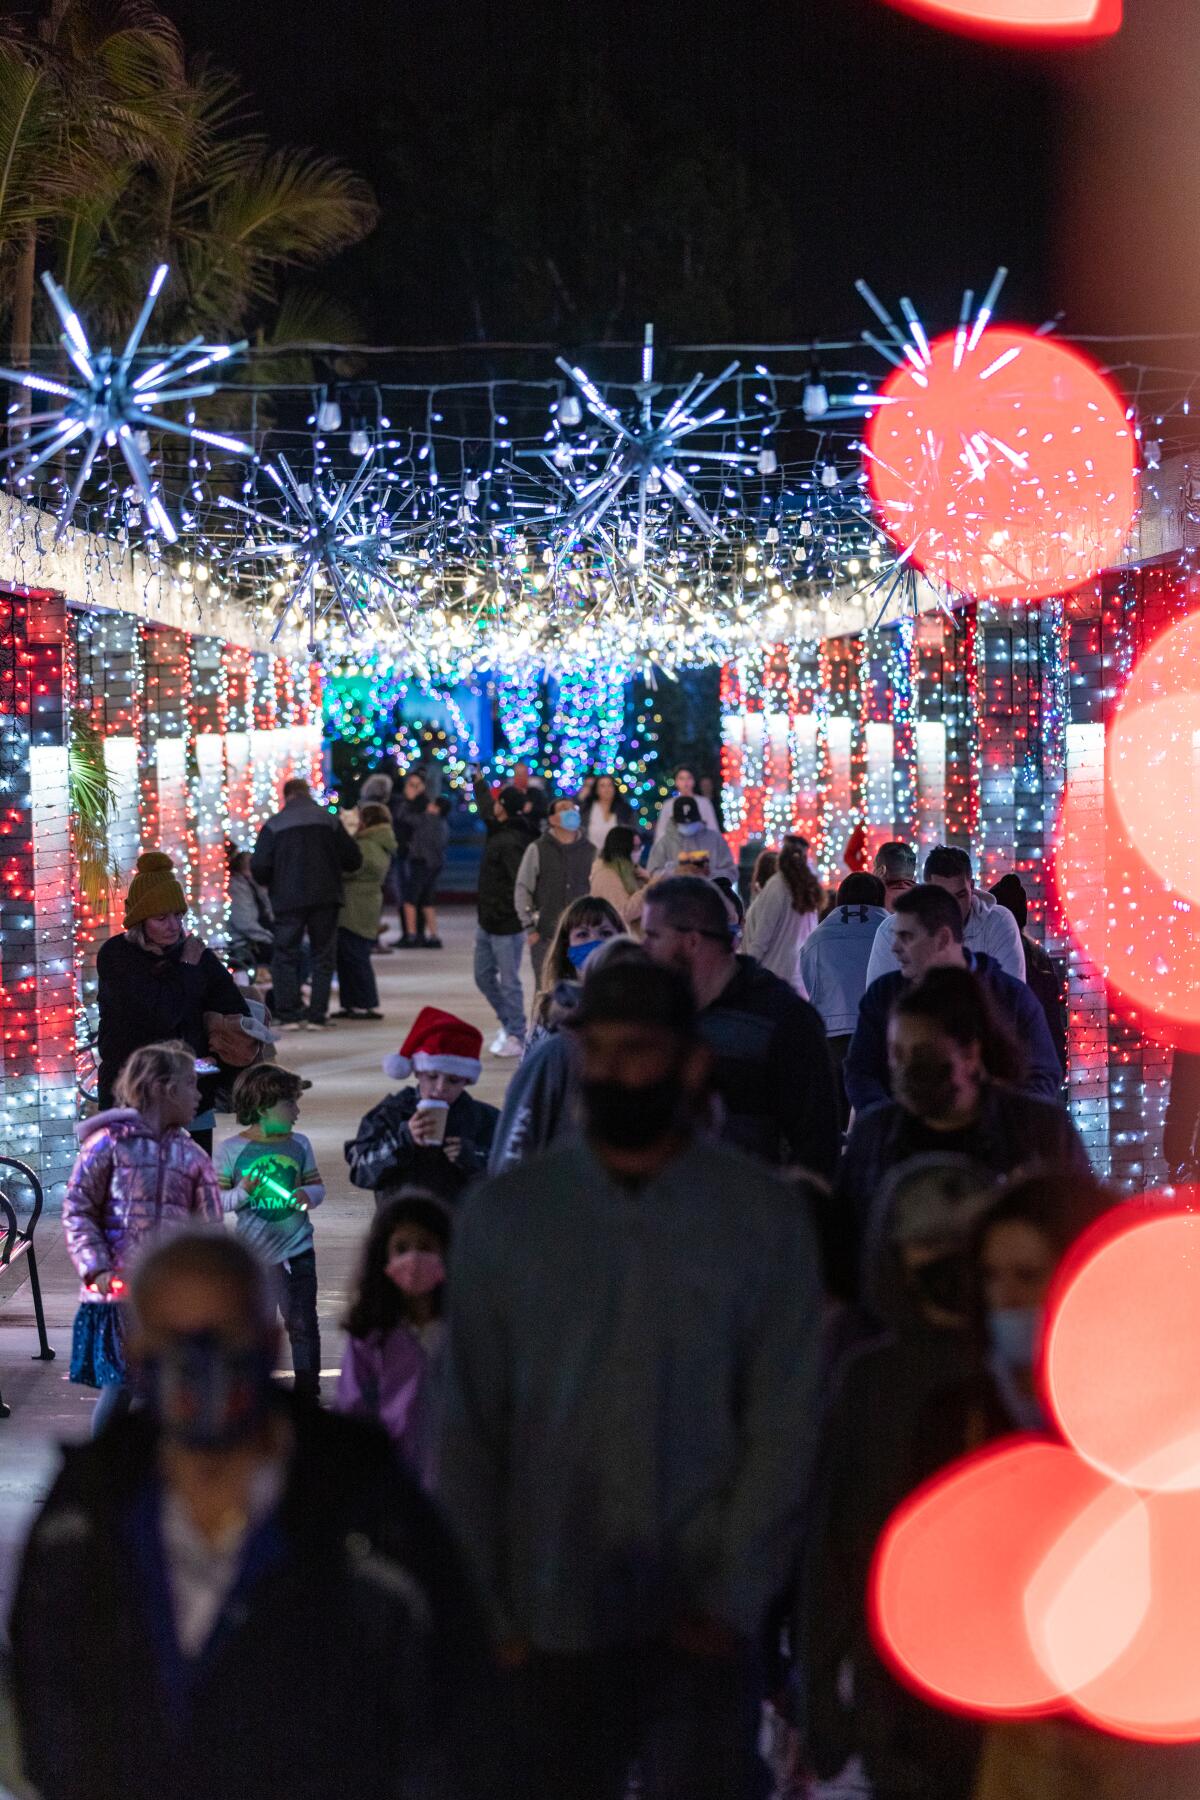 Dana Point Harbor’s annual holiday light display boasts over 700,000 LED lights.